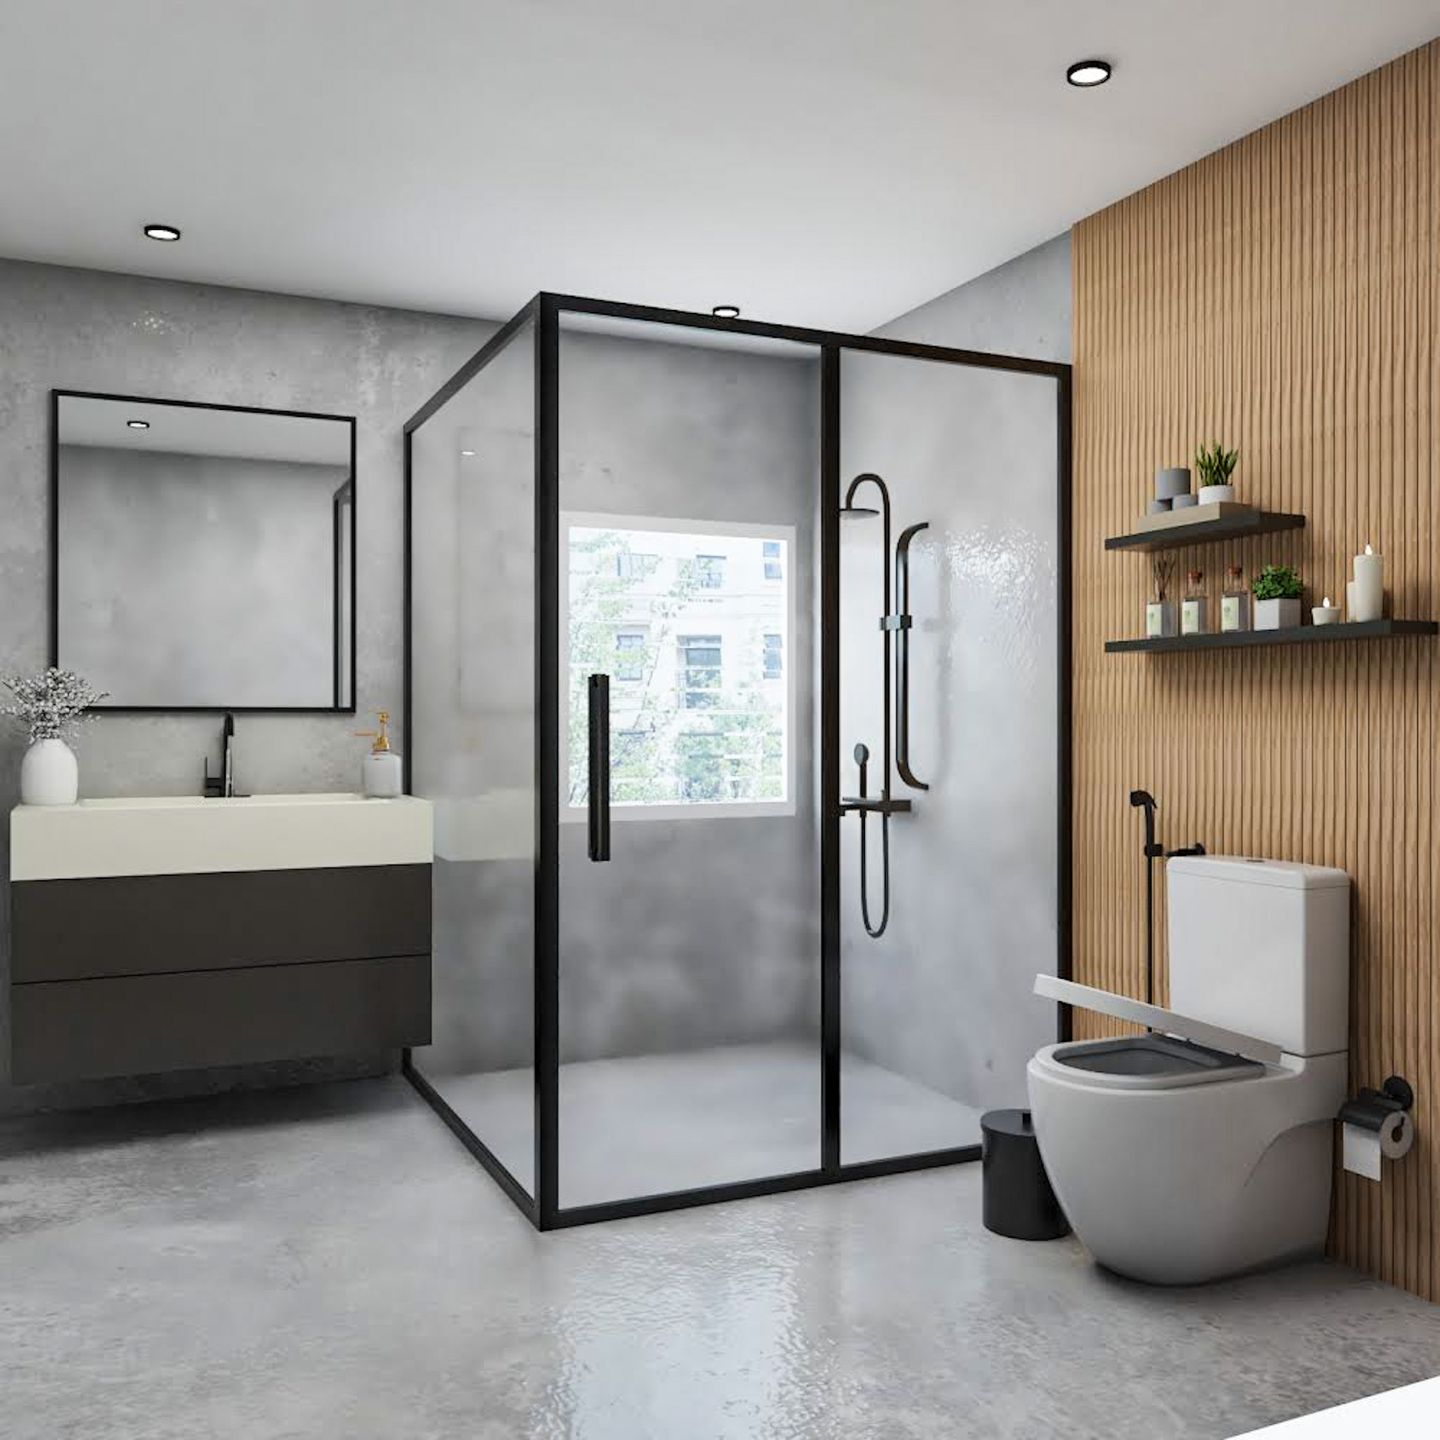 Spacious Bathroom Design With A Shower Unit - Livspace